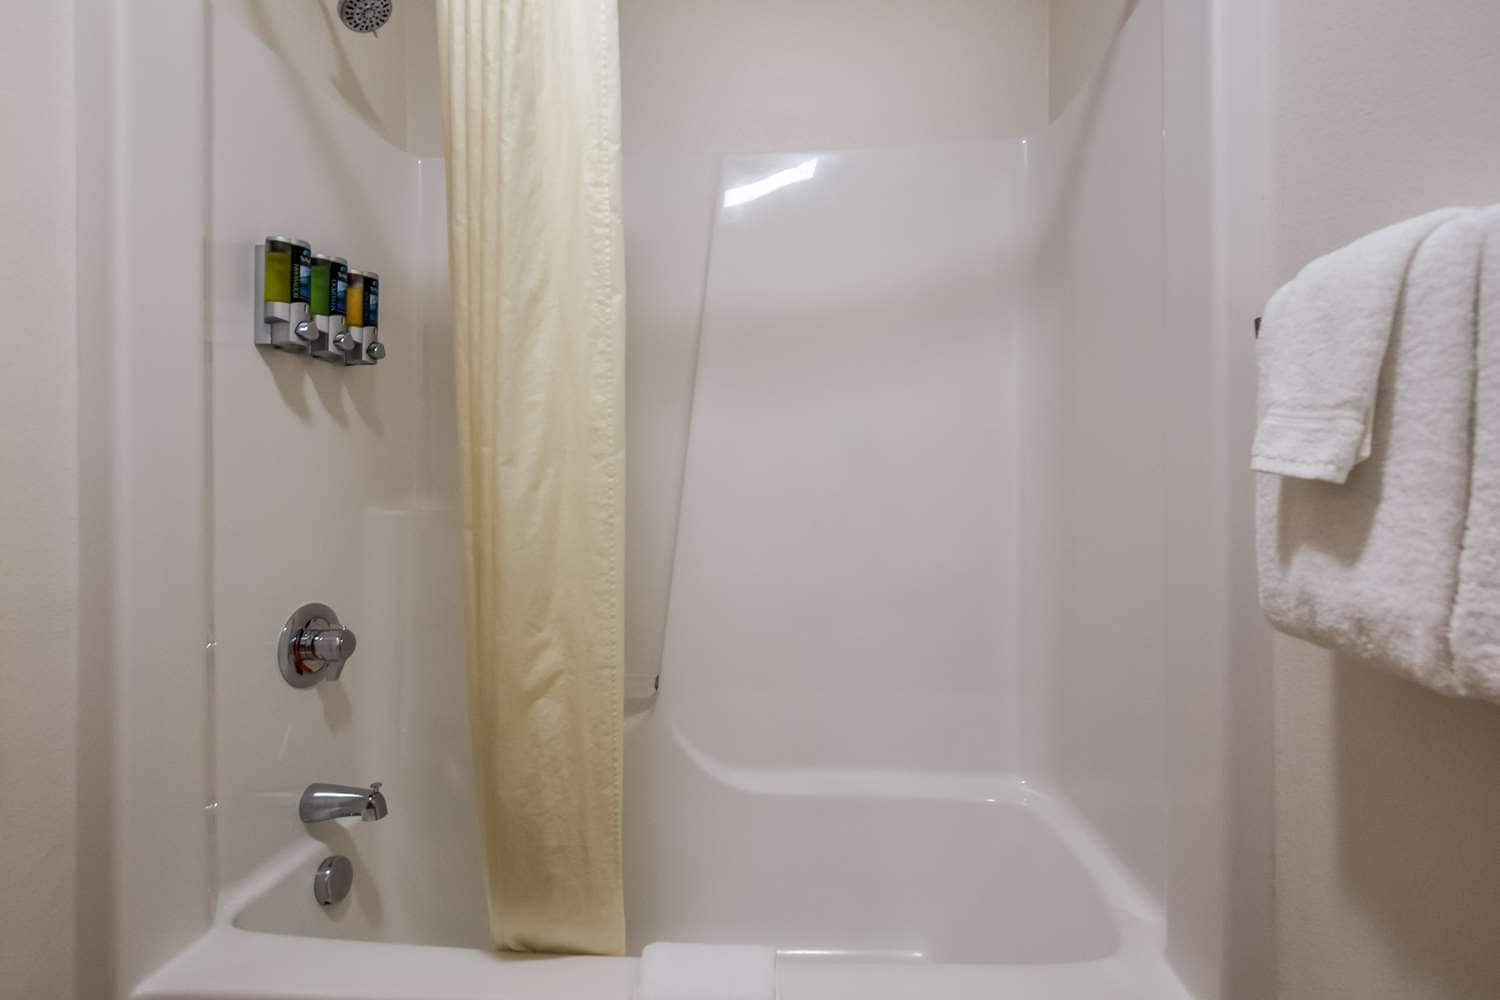 Tornado Body Dryer - Air Dry instead of Towel Dry -- Inside Shower